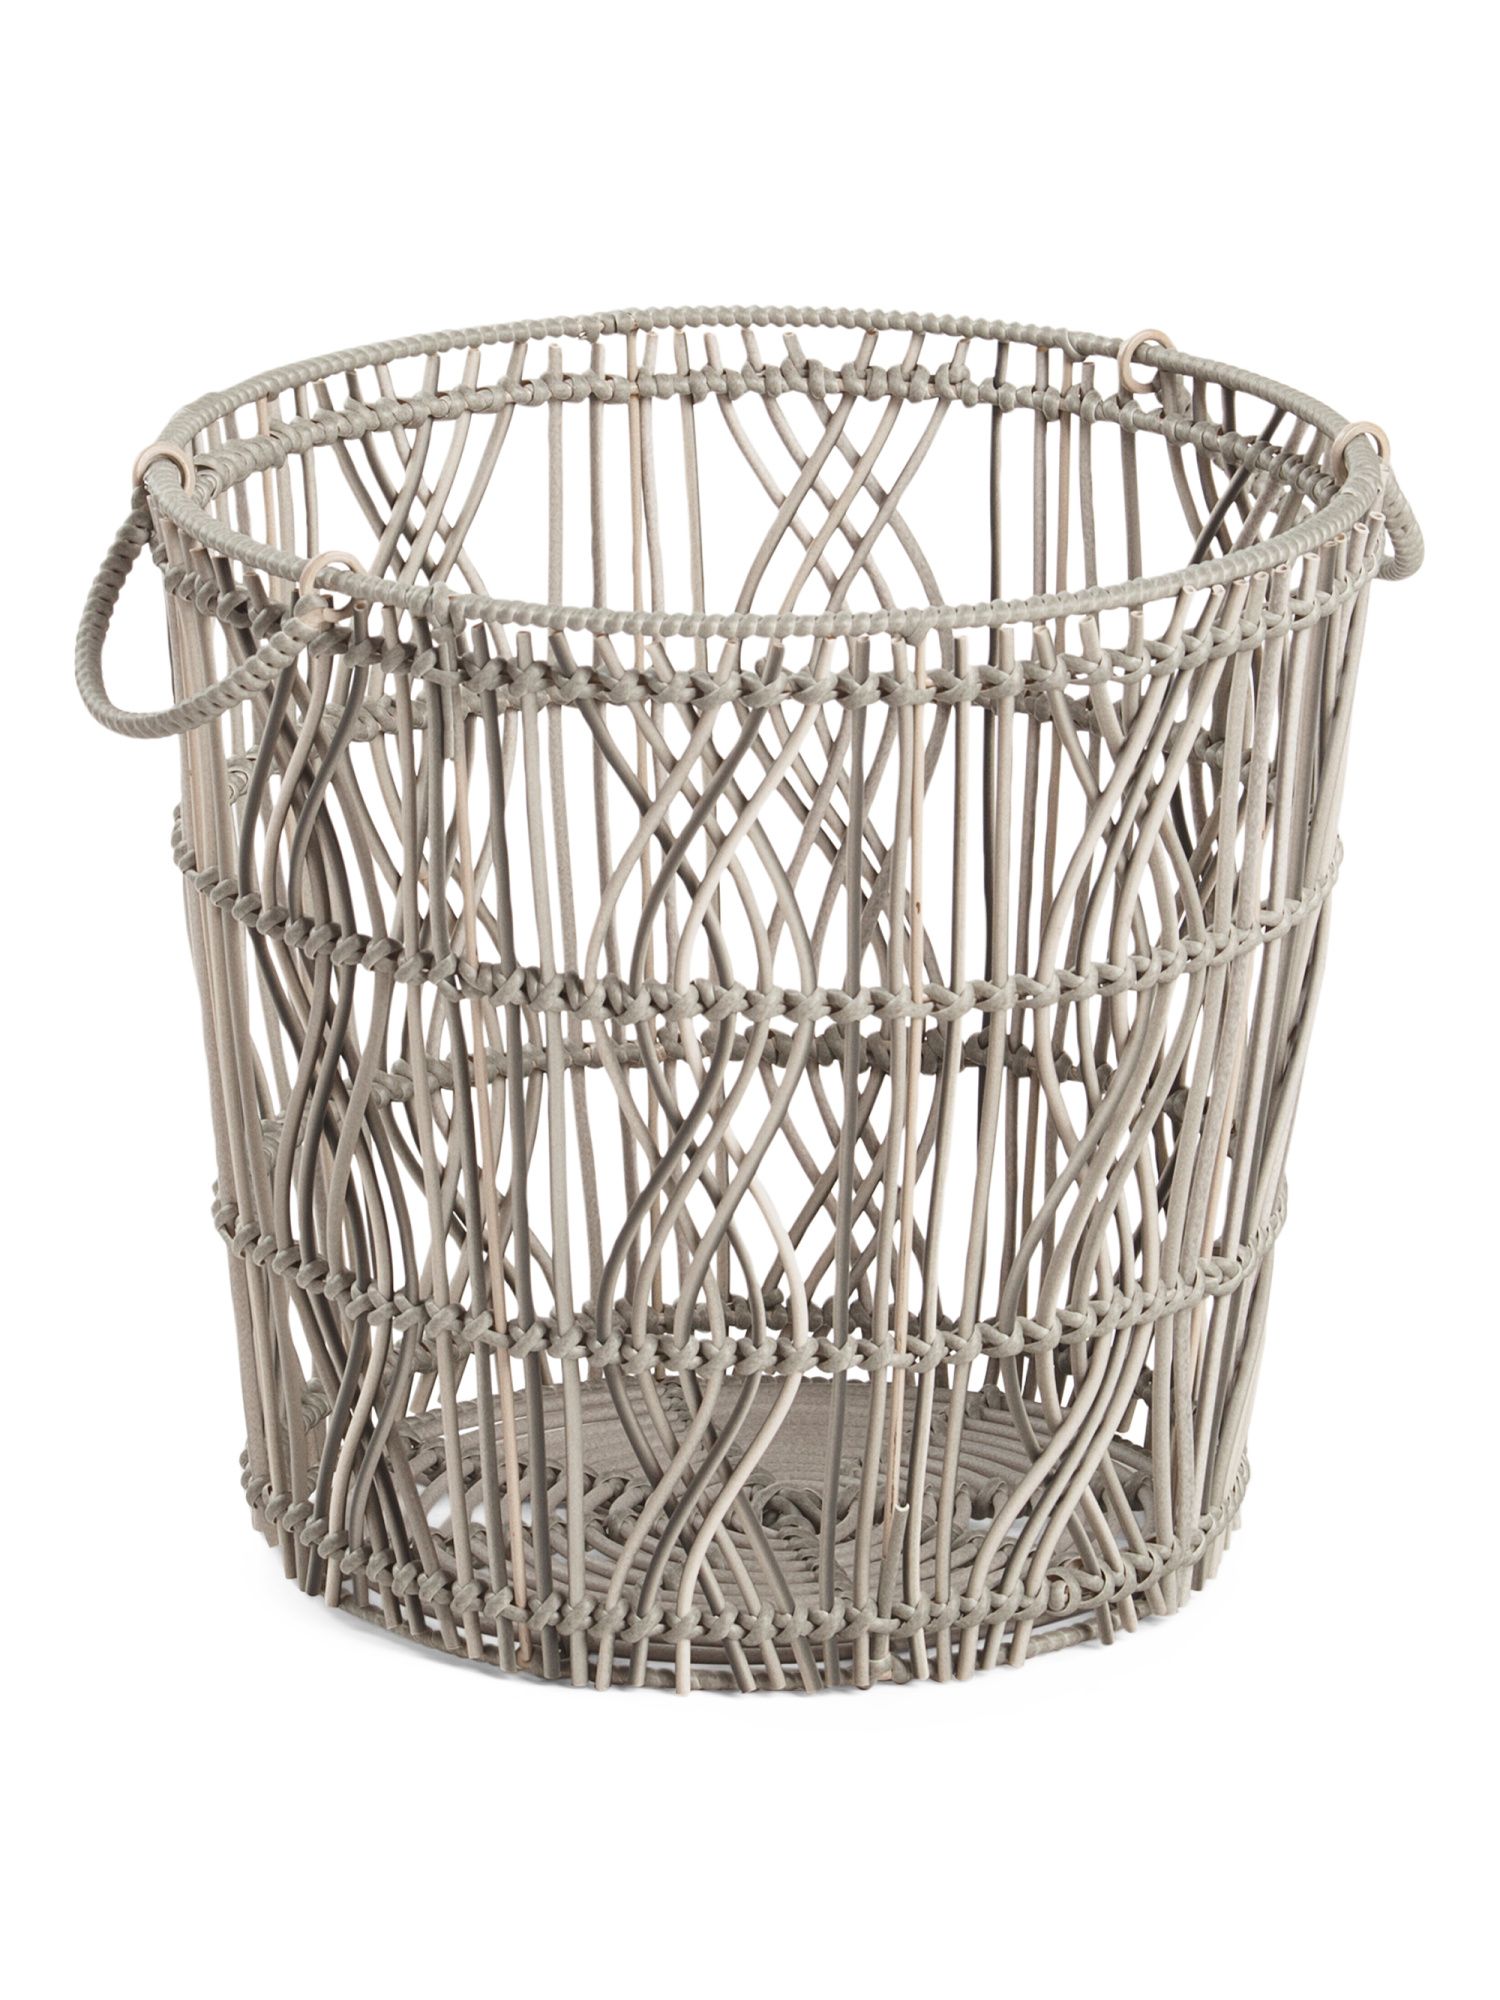 Medium  Round Basket With Handles | TJ Maxx